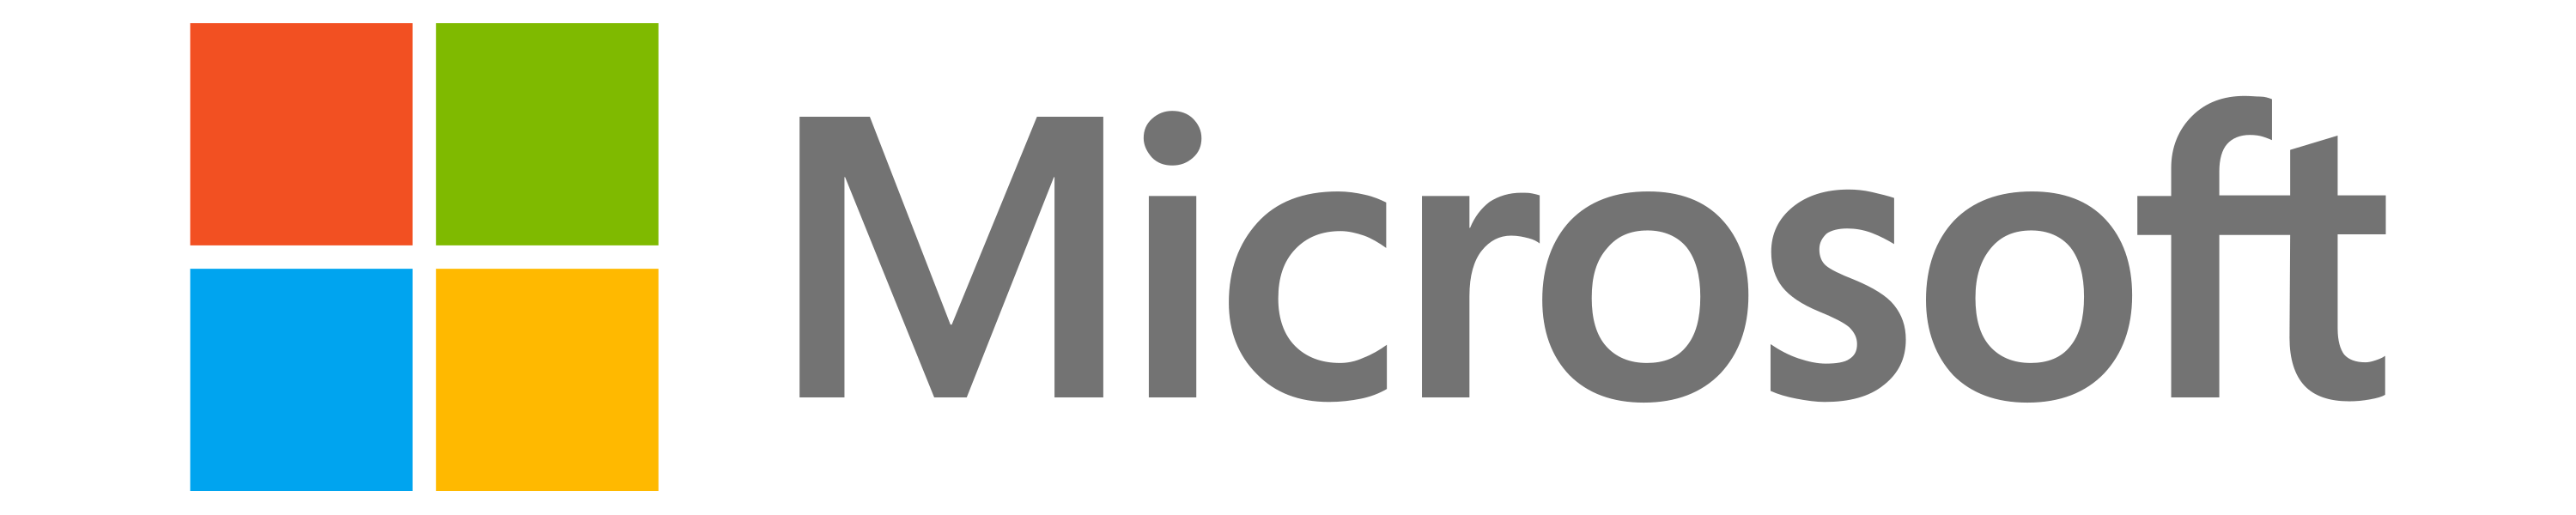 Microsoft_logo 2